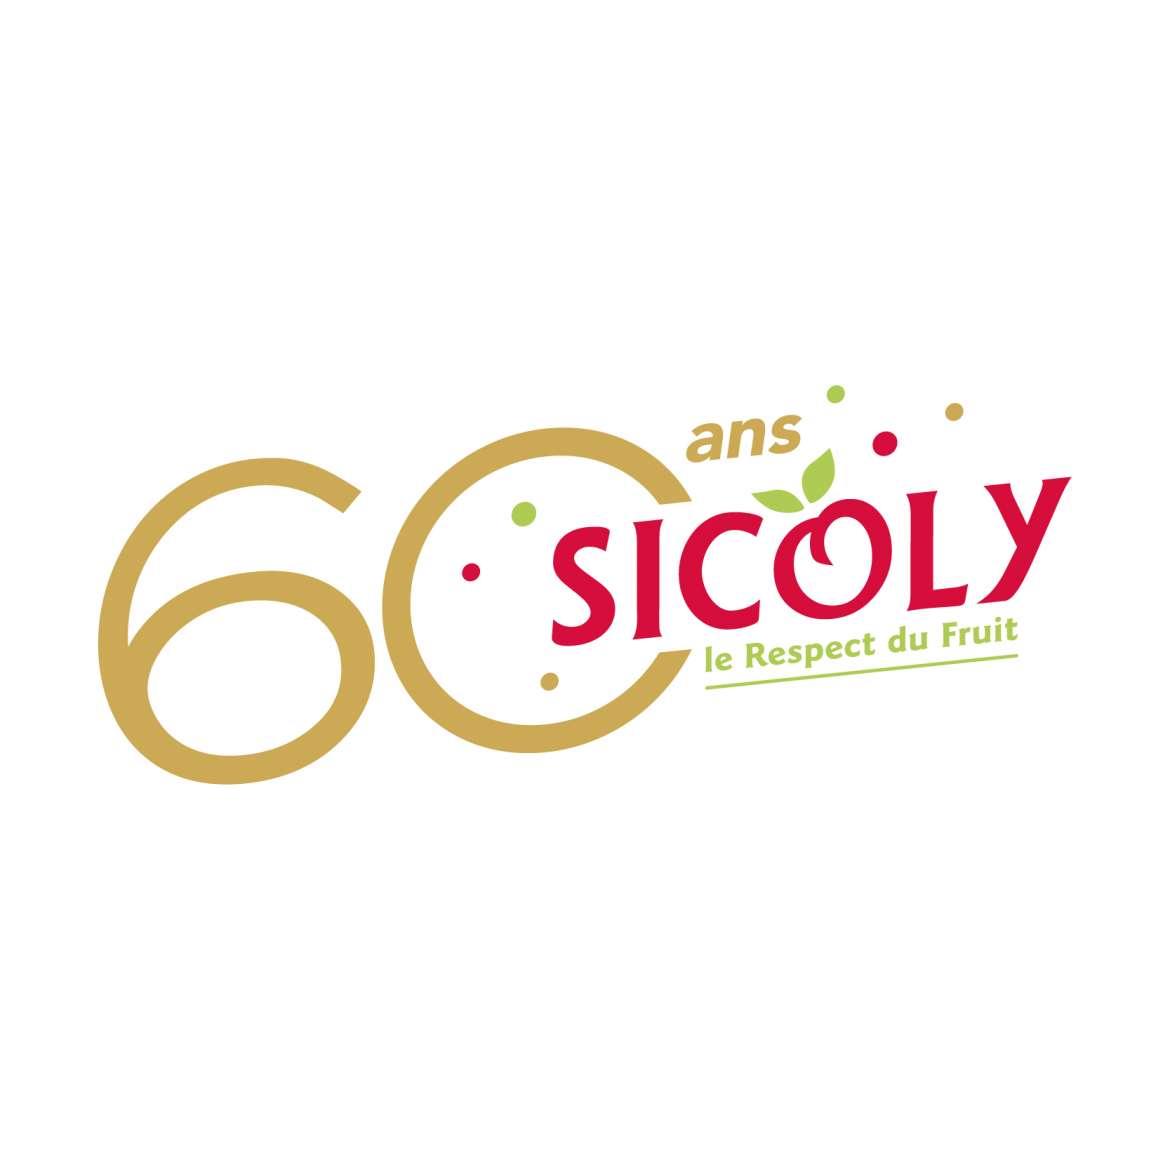 SICOLY celebrates its 60th birthday !